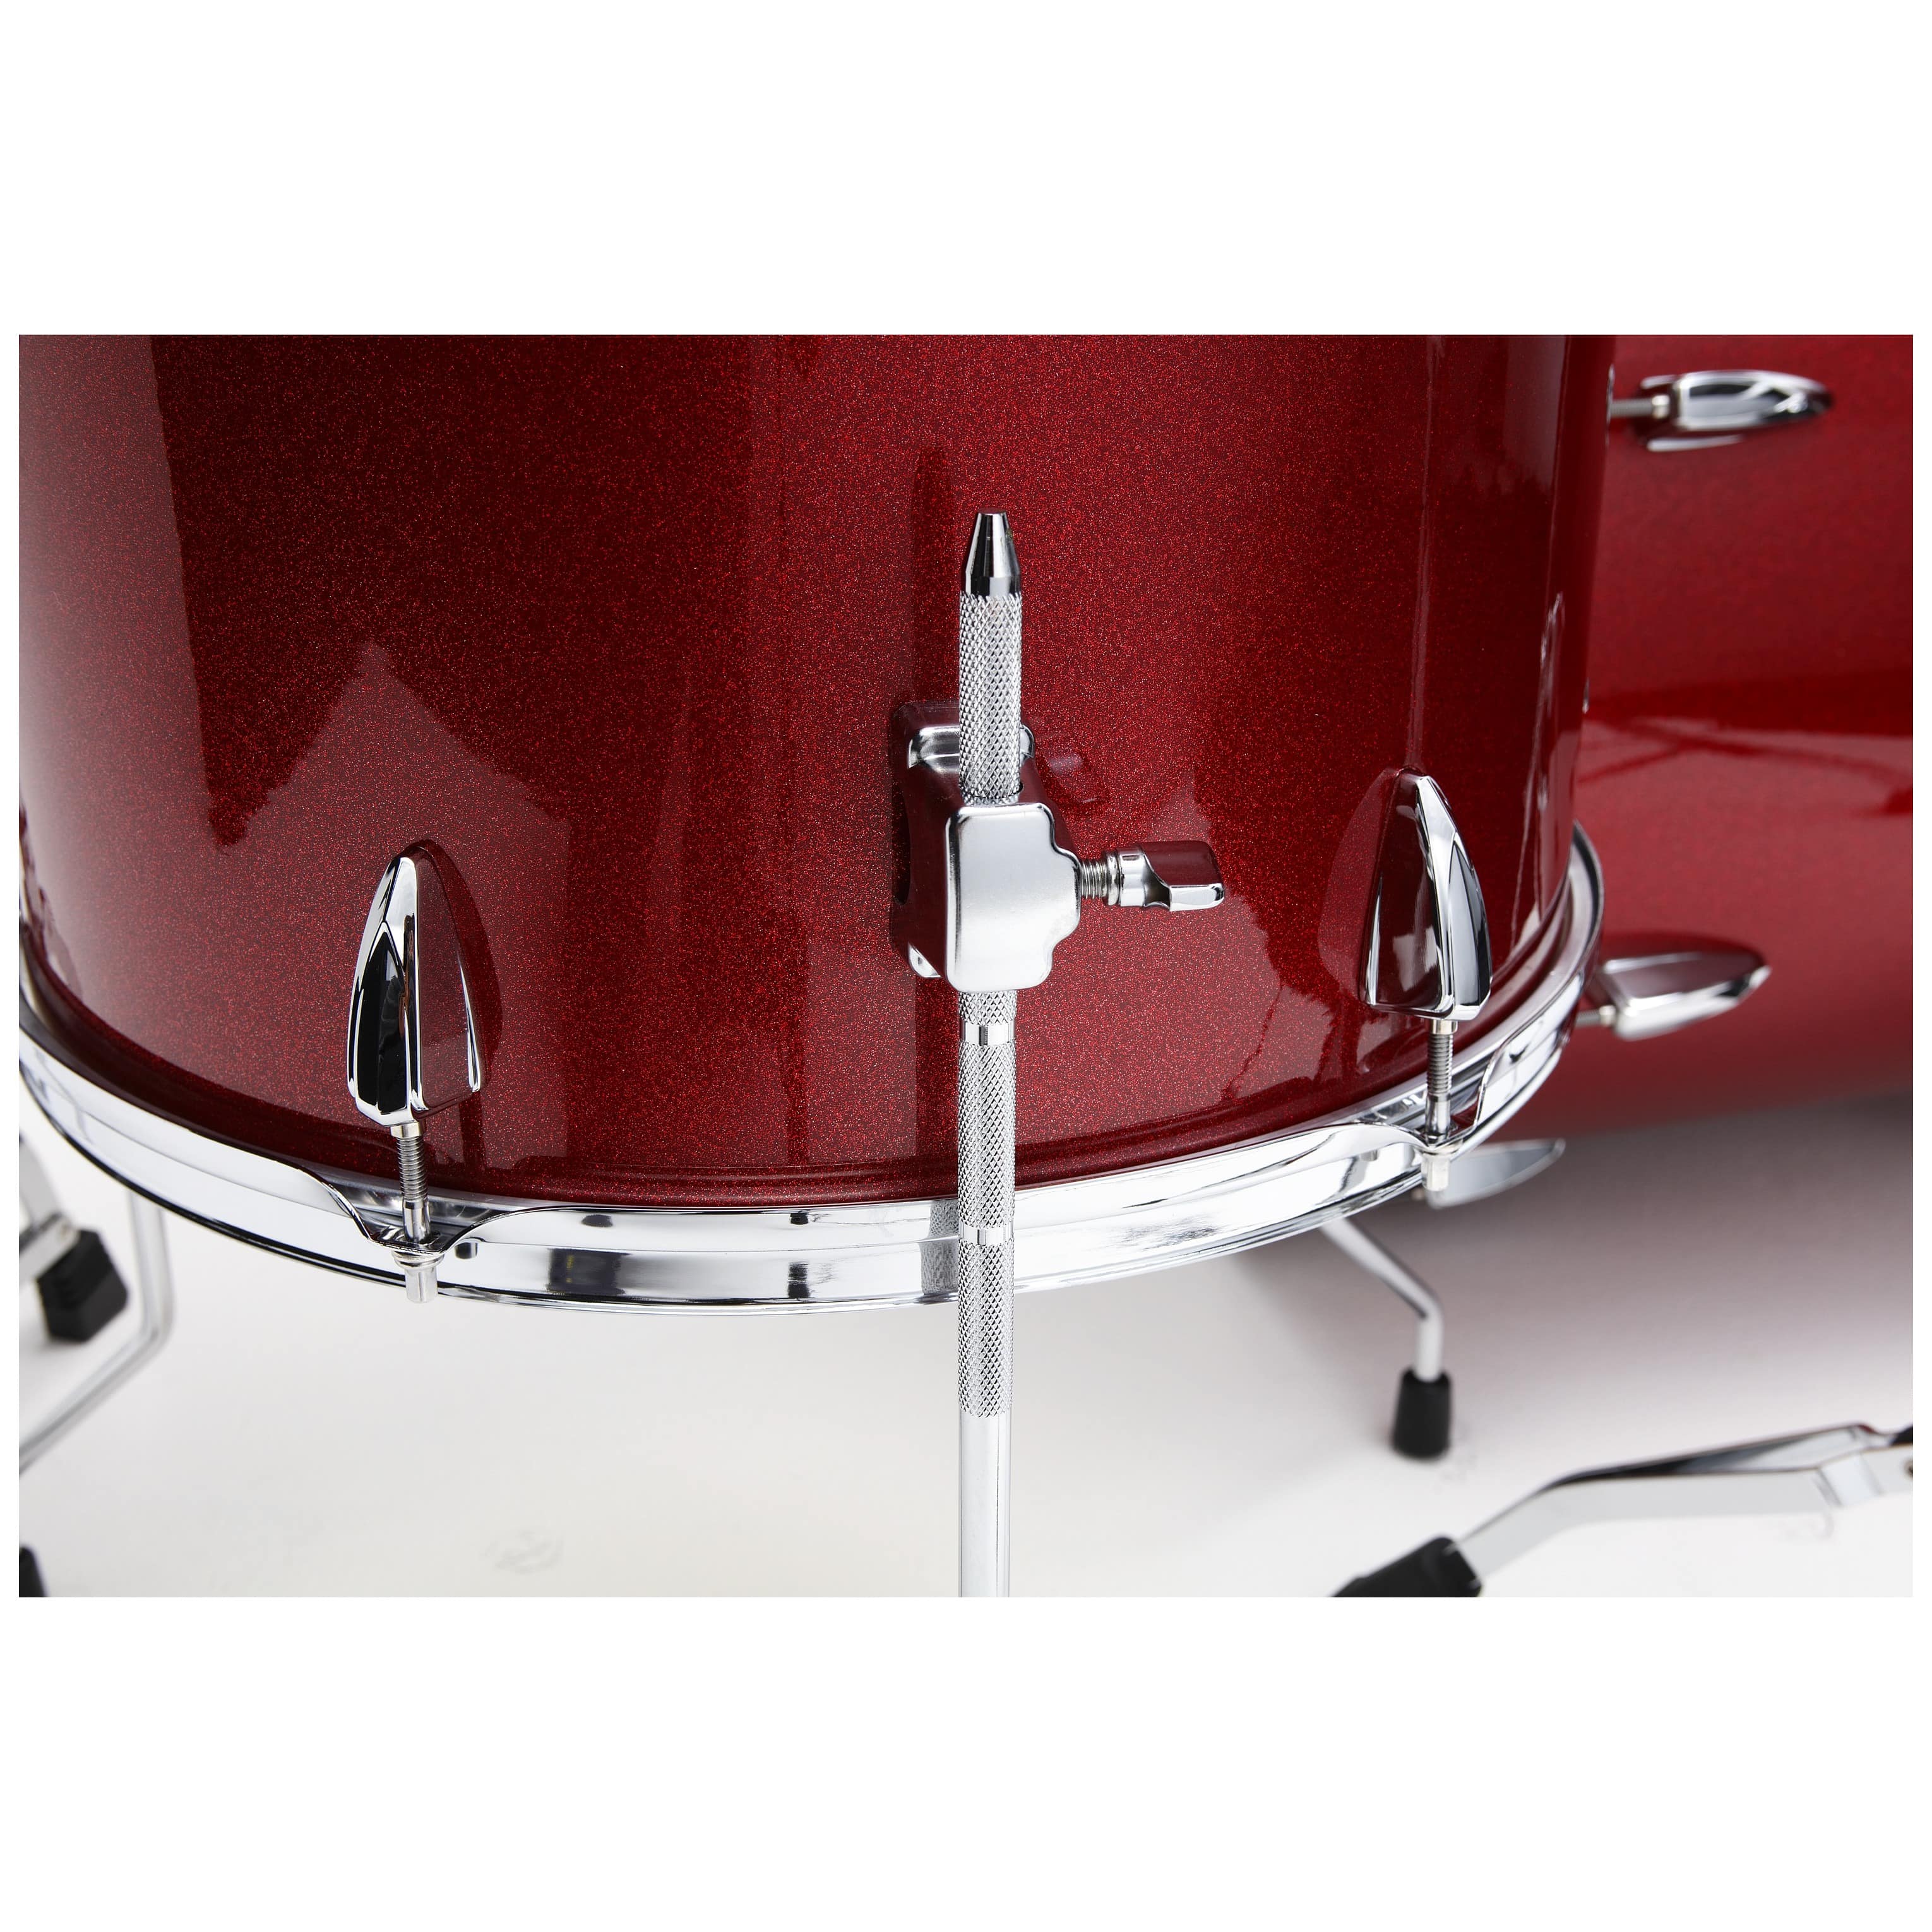 Tama IP52H6W-BRM Imperialstar Drumset 5 teilig - Burnt Red Mist/Chrom HW + MEINL Cymbals HCS Bronze 4